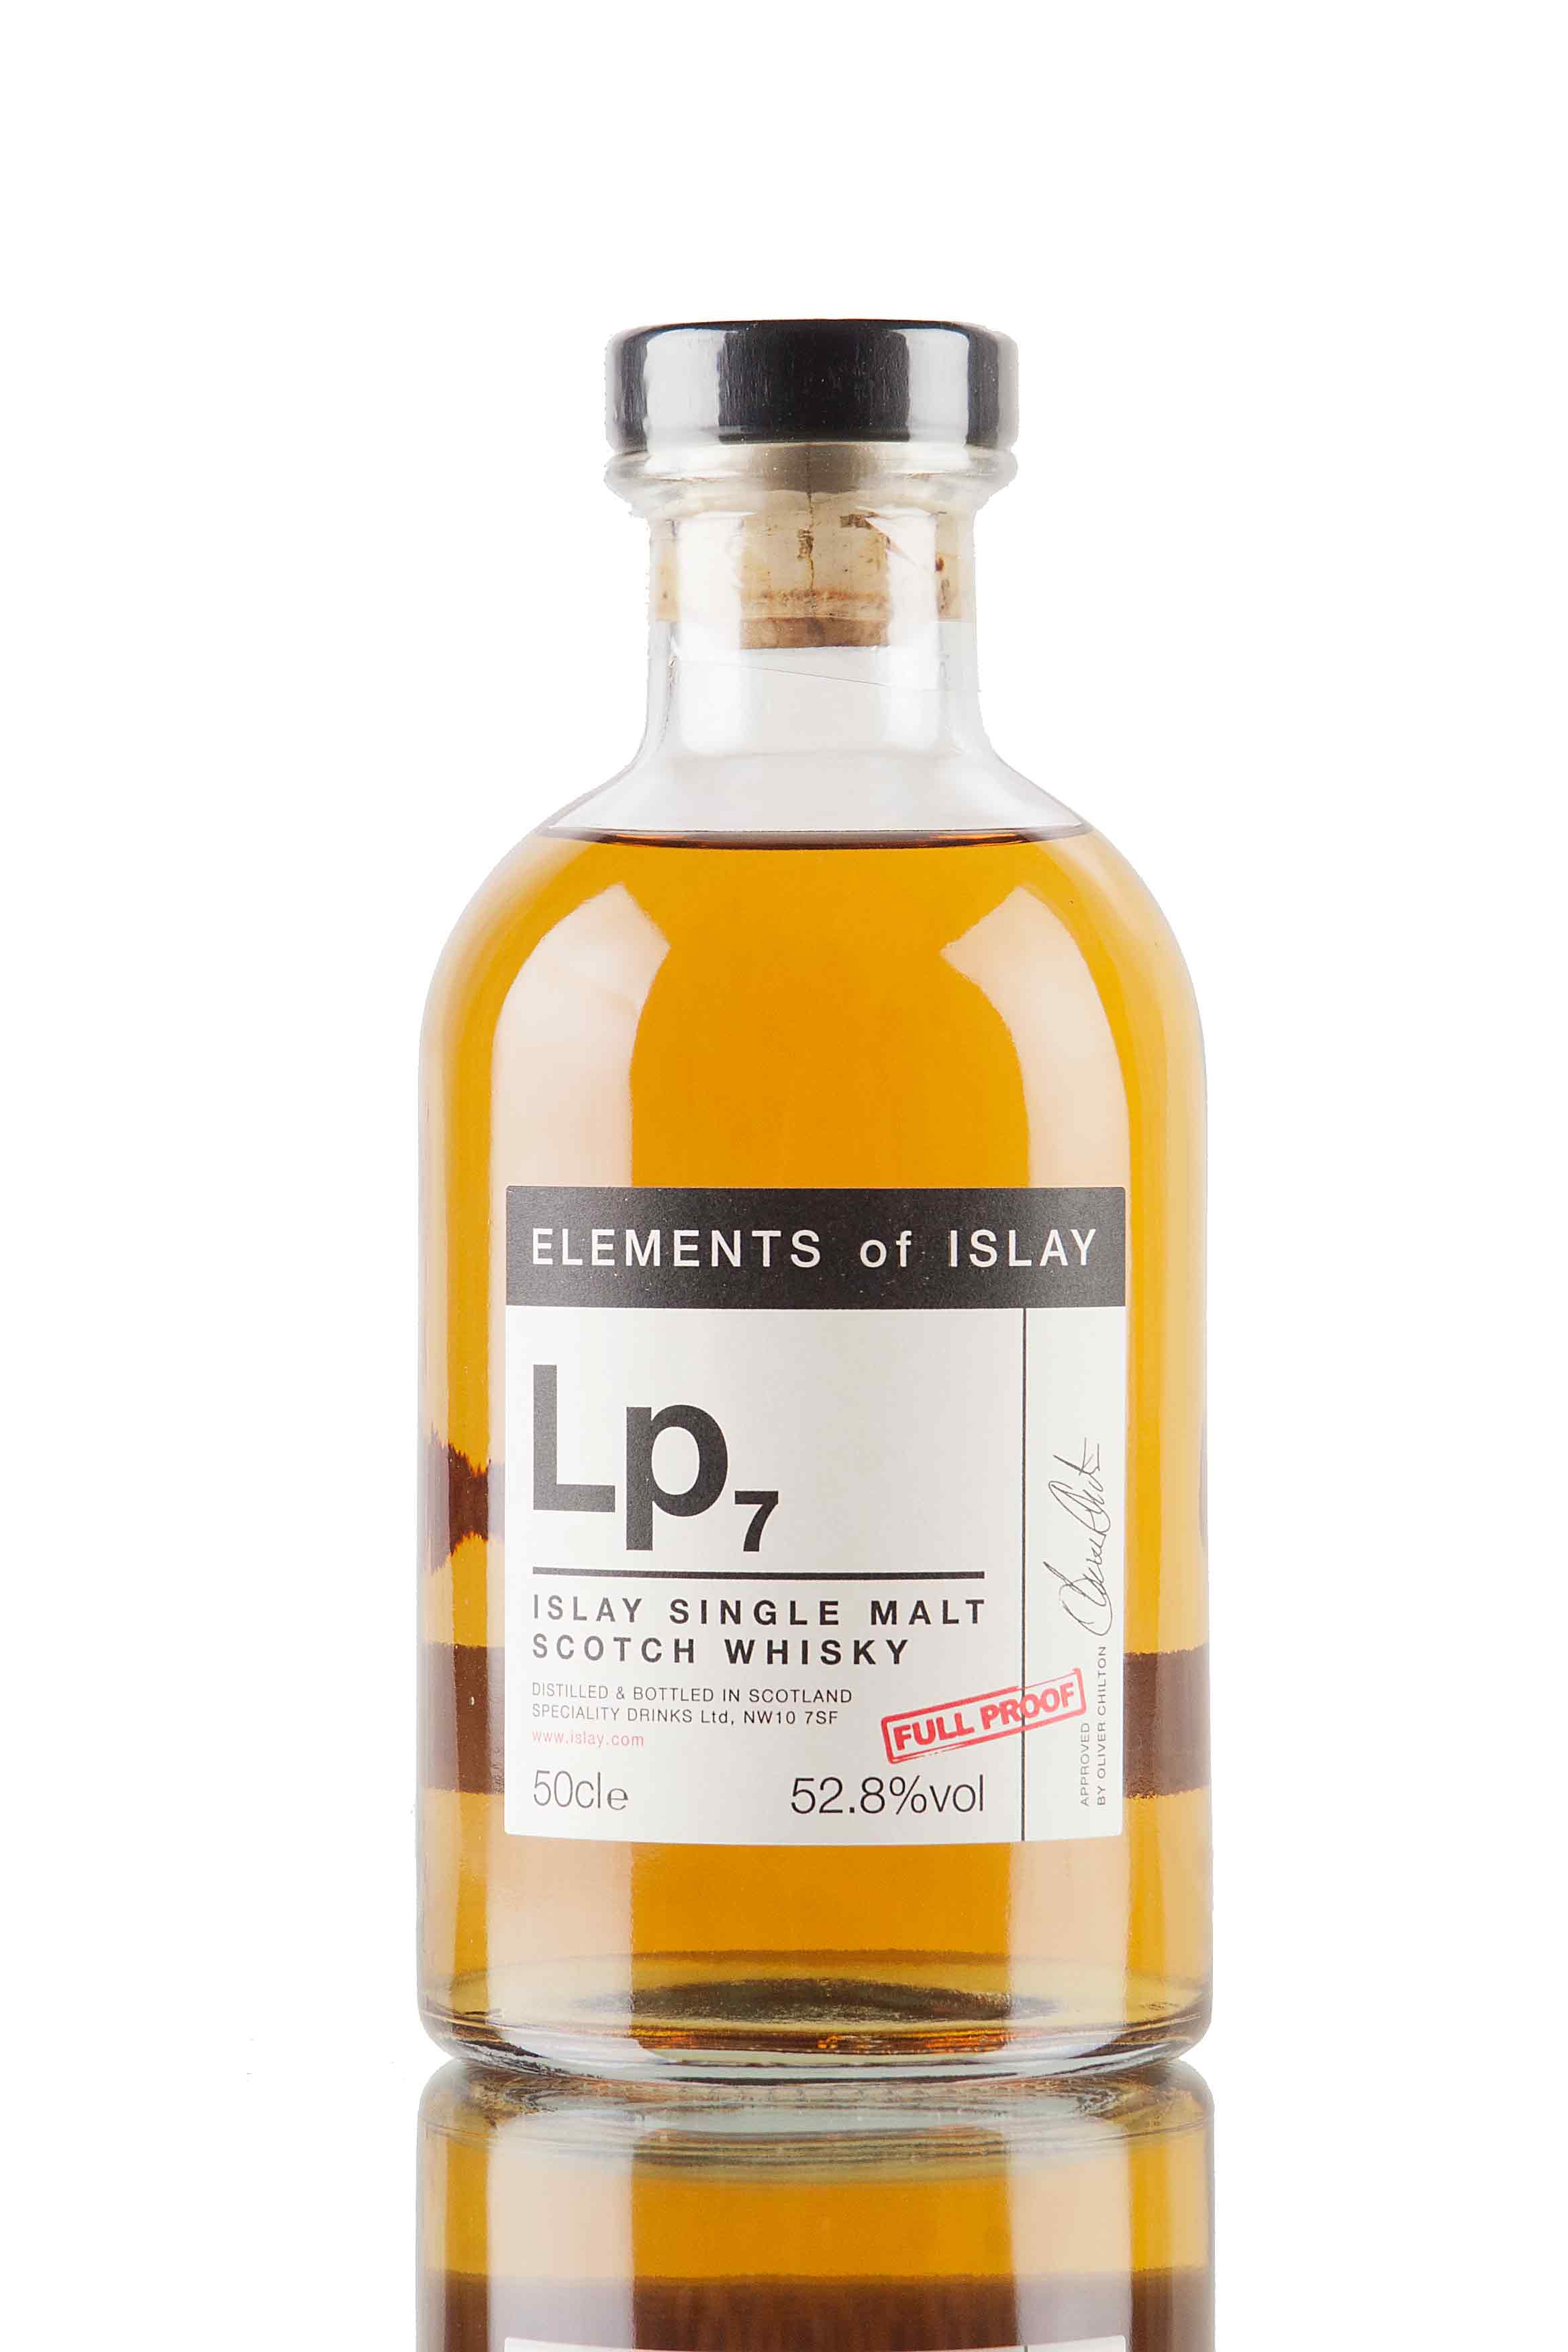 Lp7 - Elements of Islay (Laphroaig)